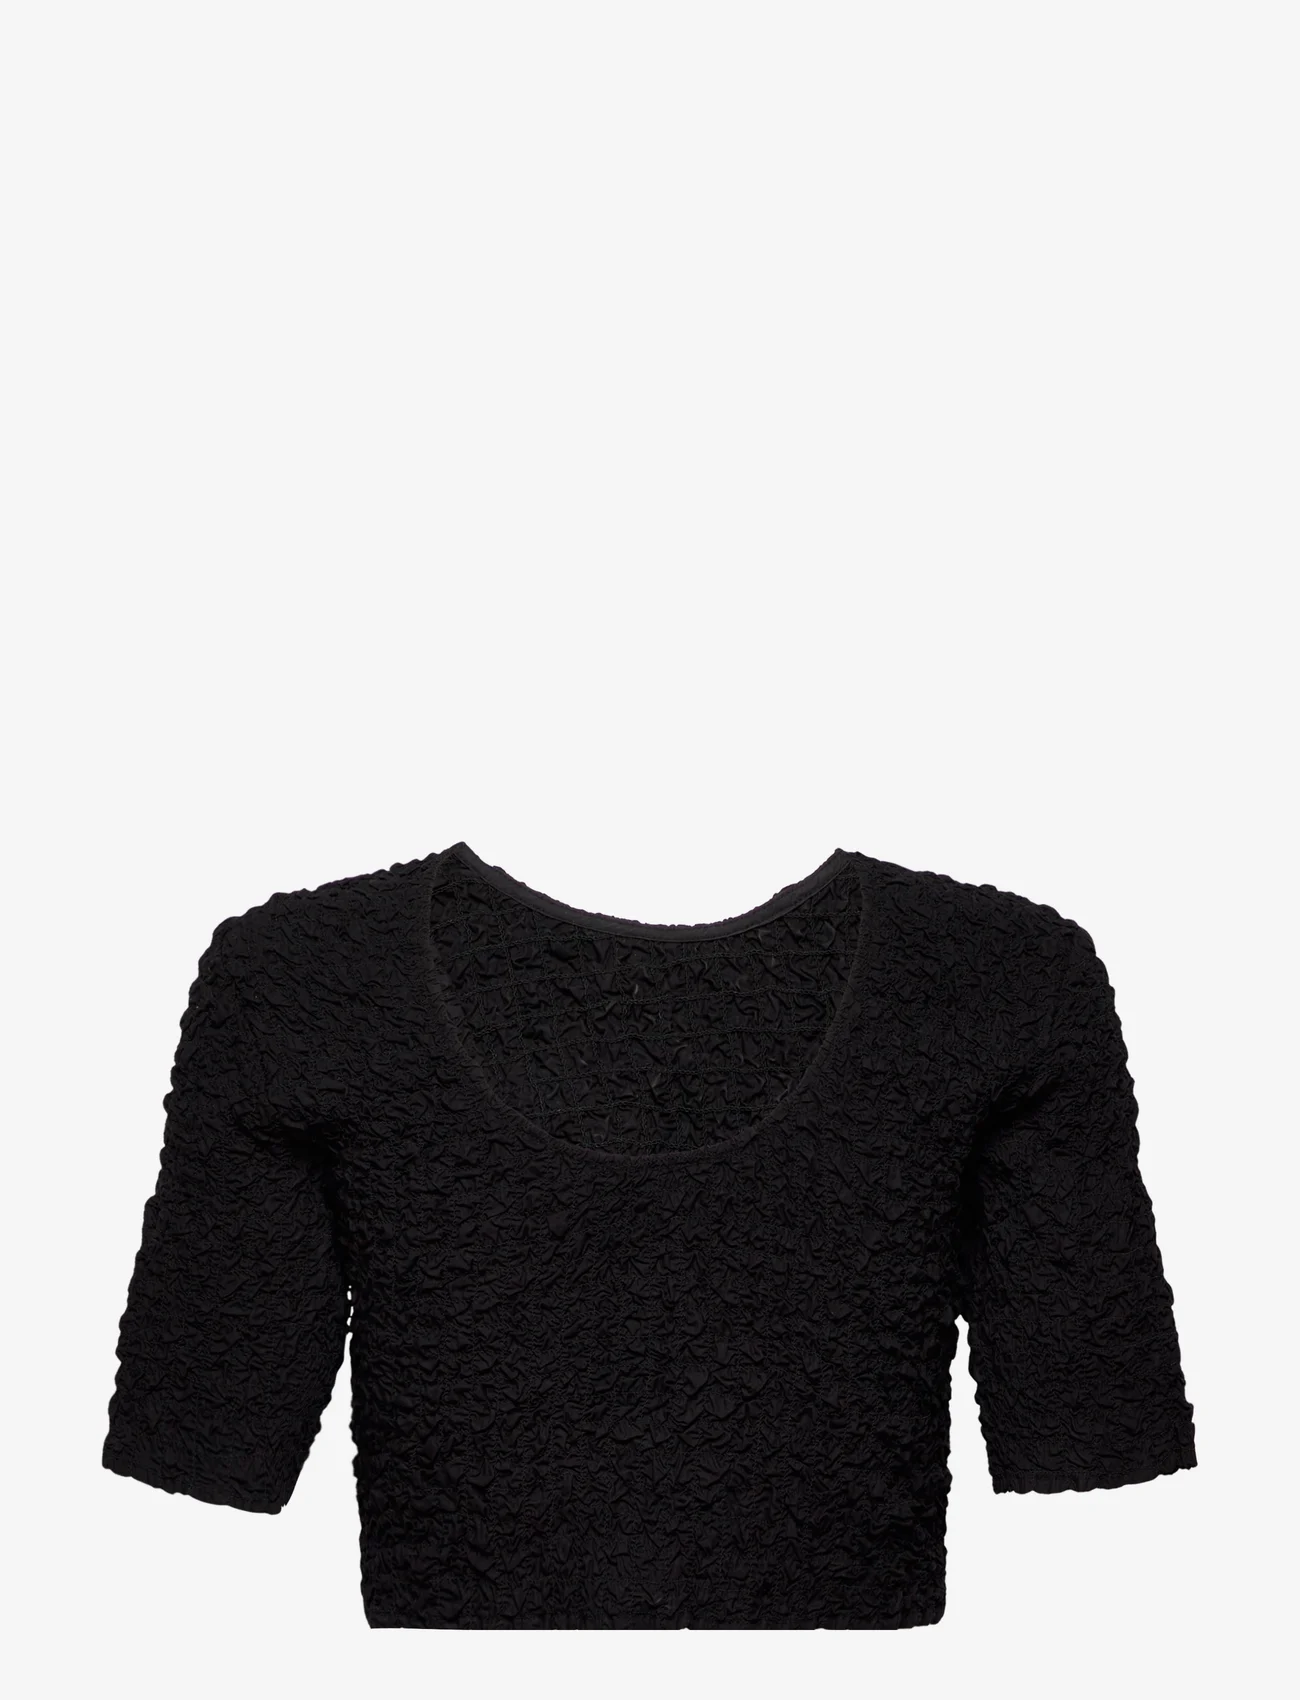 Ganni - Cotton Poplin - navel shirts - black - 1